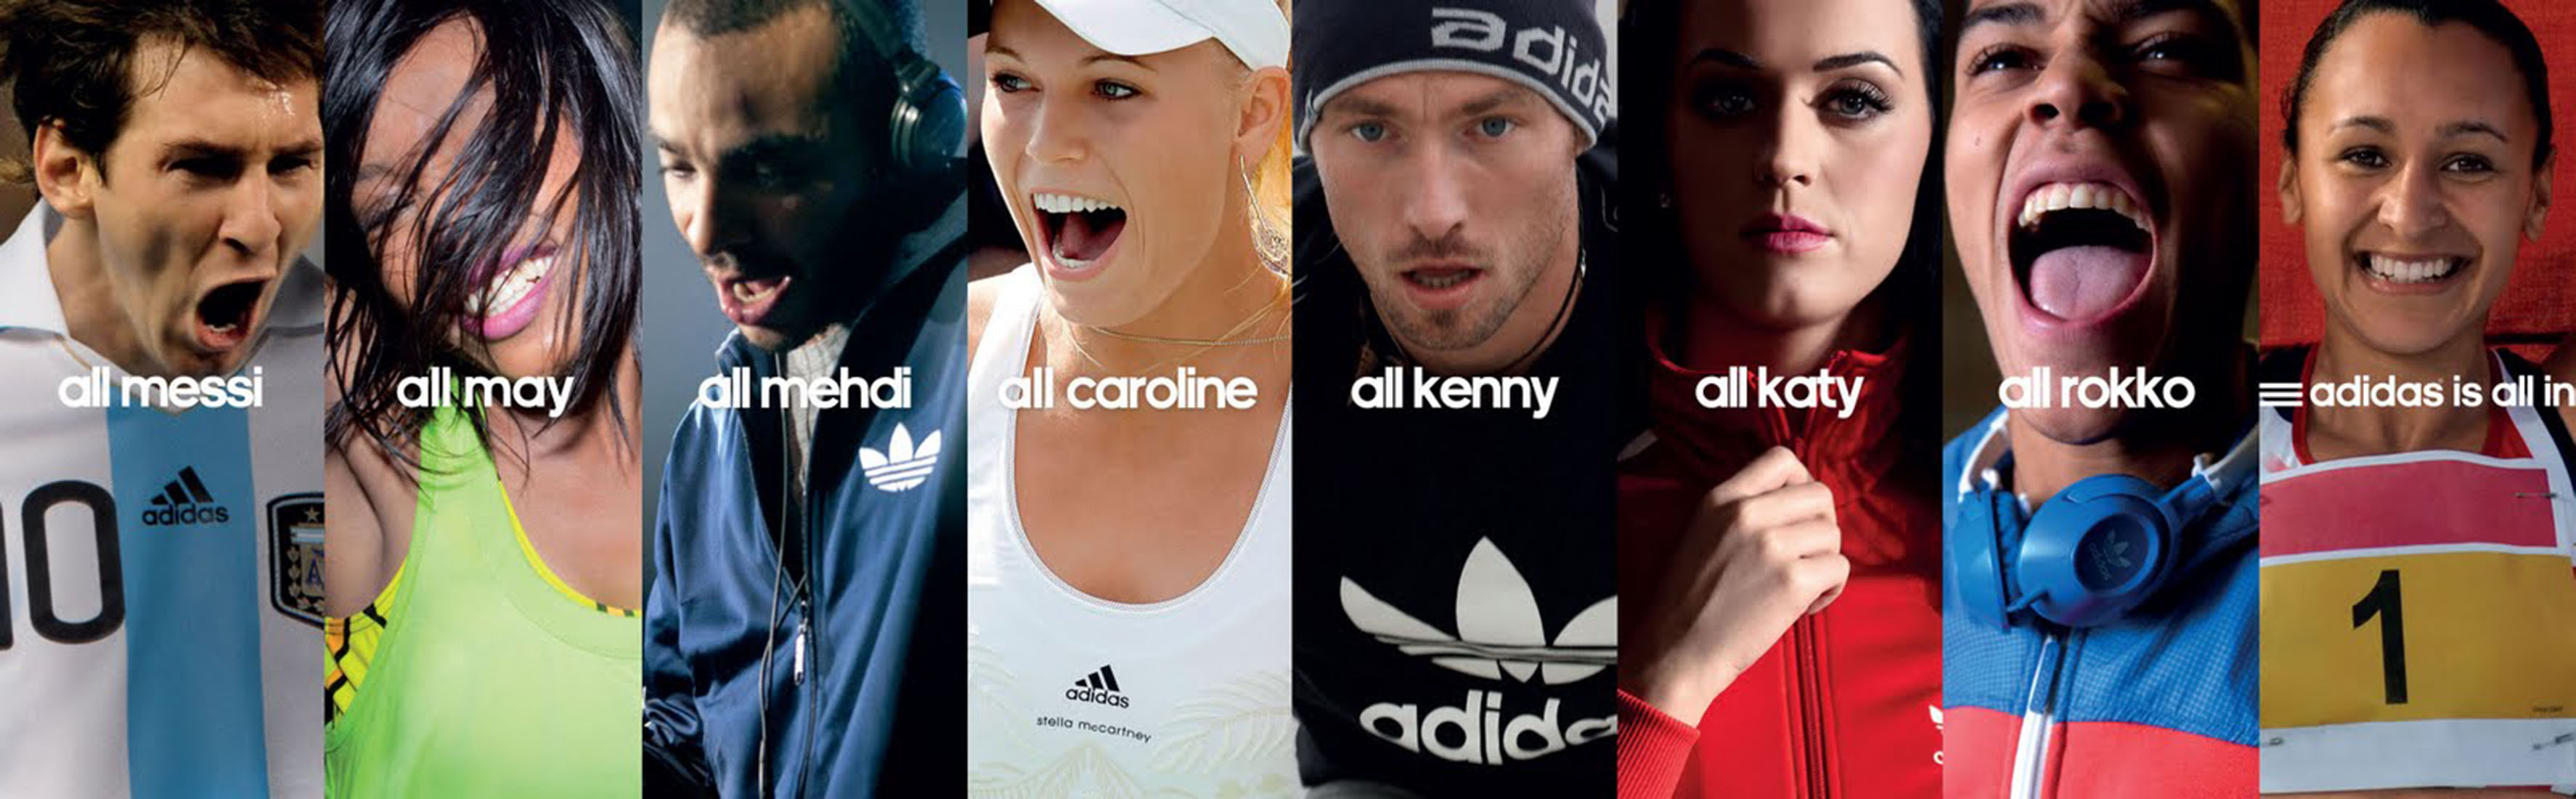 Adidas All In – Dagmar Hoogland